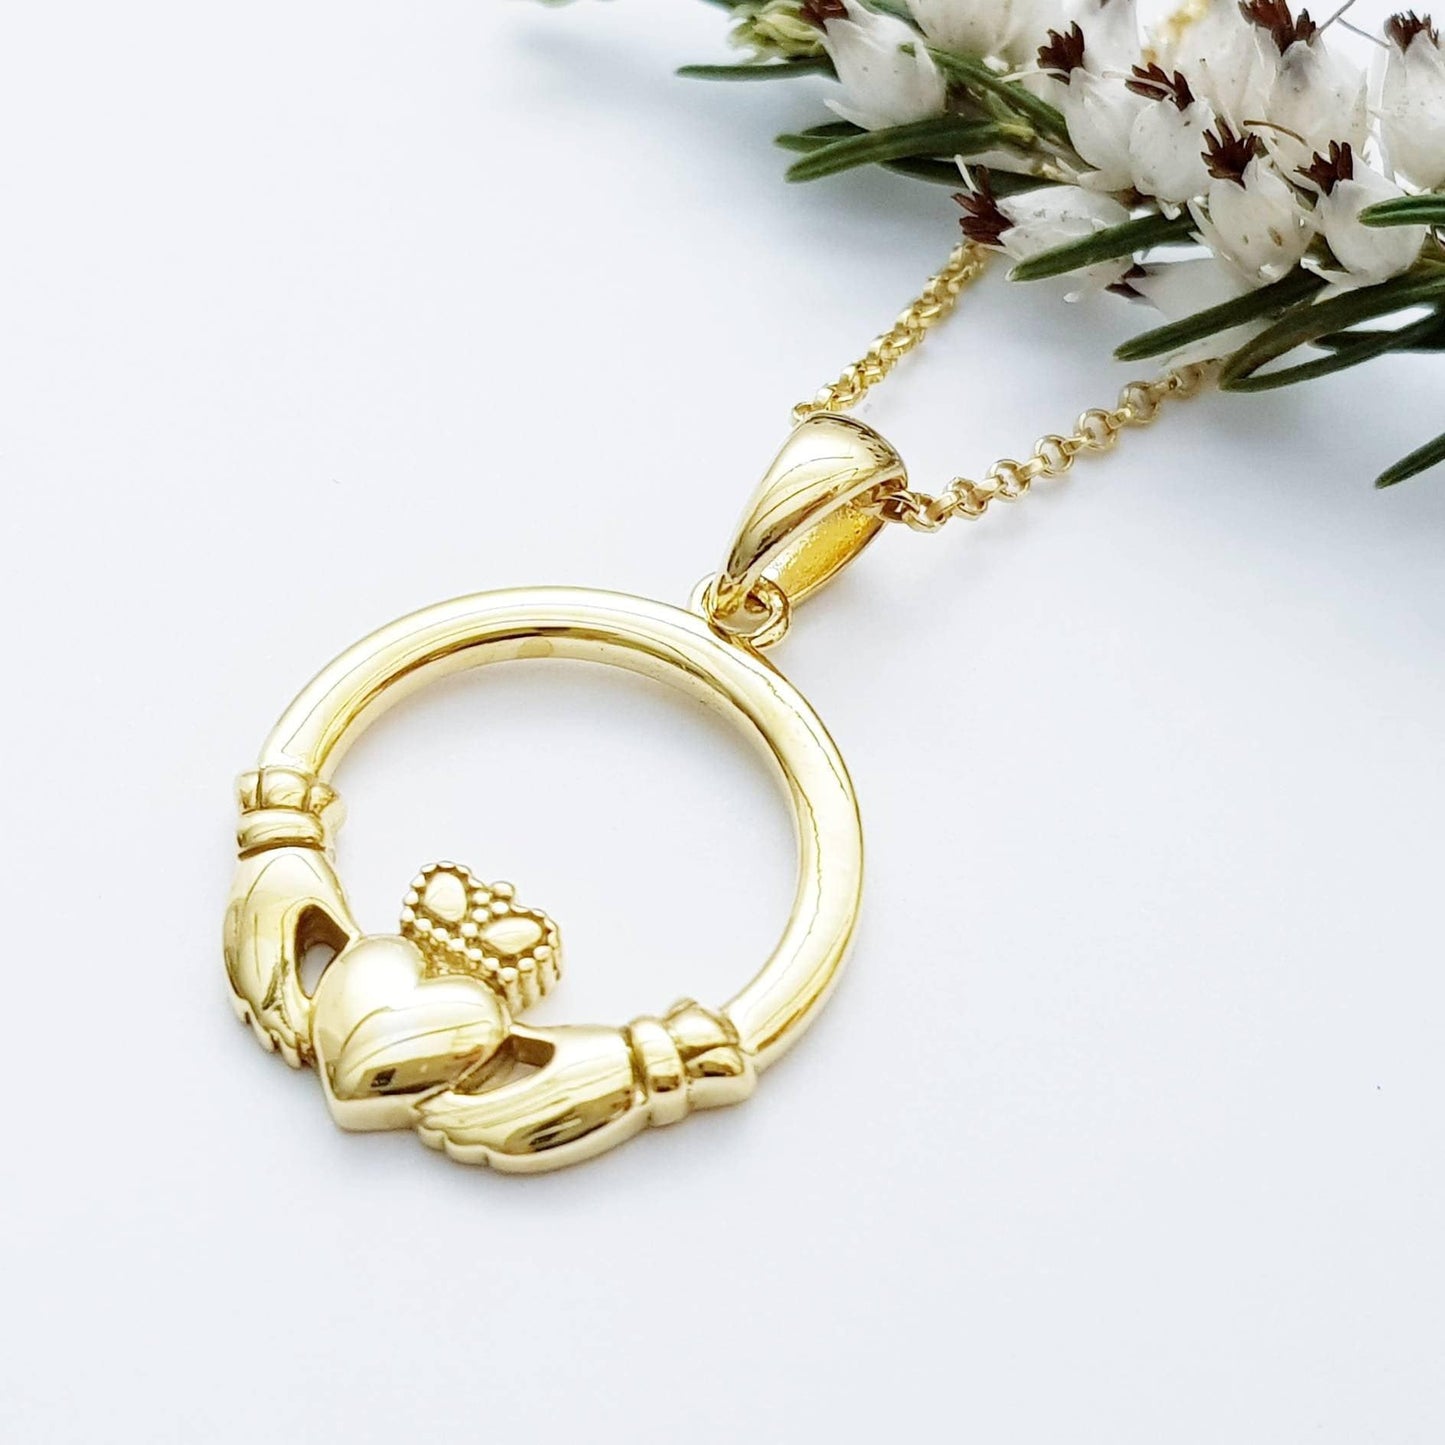 Gold Claddagh pendant, Irish claddagh necklace from Galway, Ireland, claddagh celtic pendant